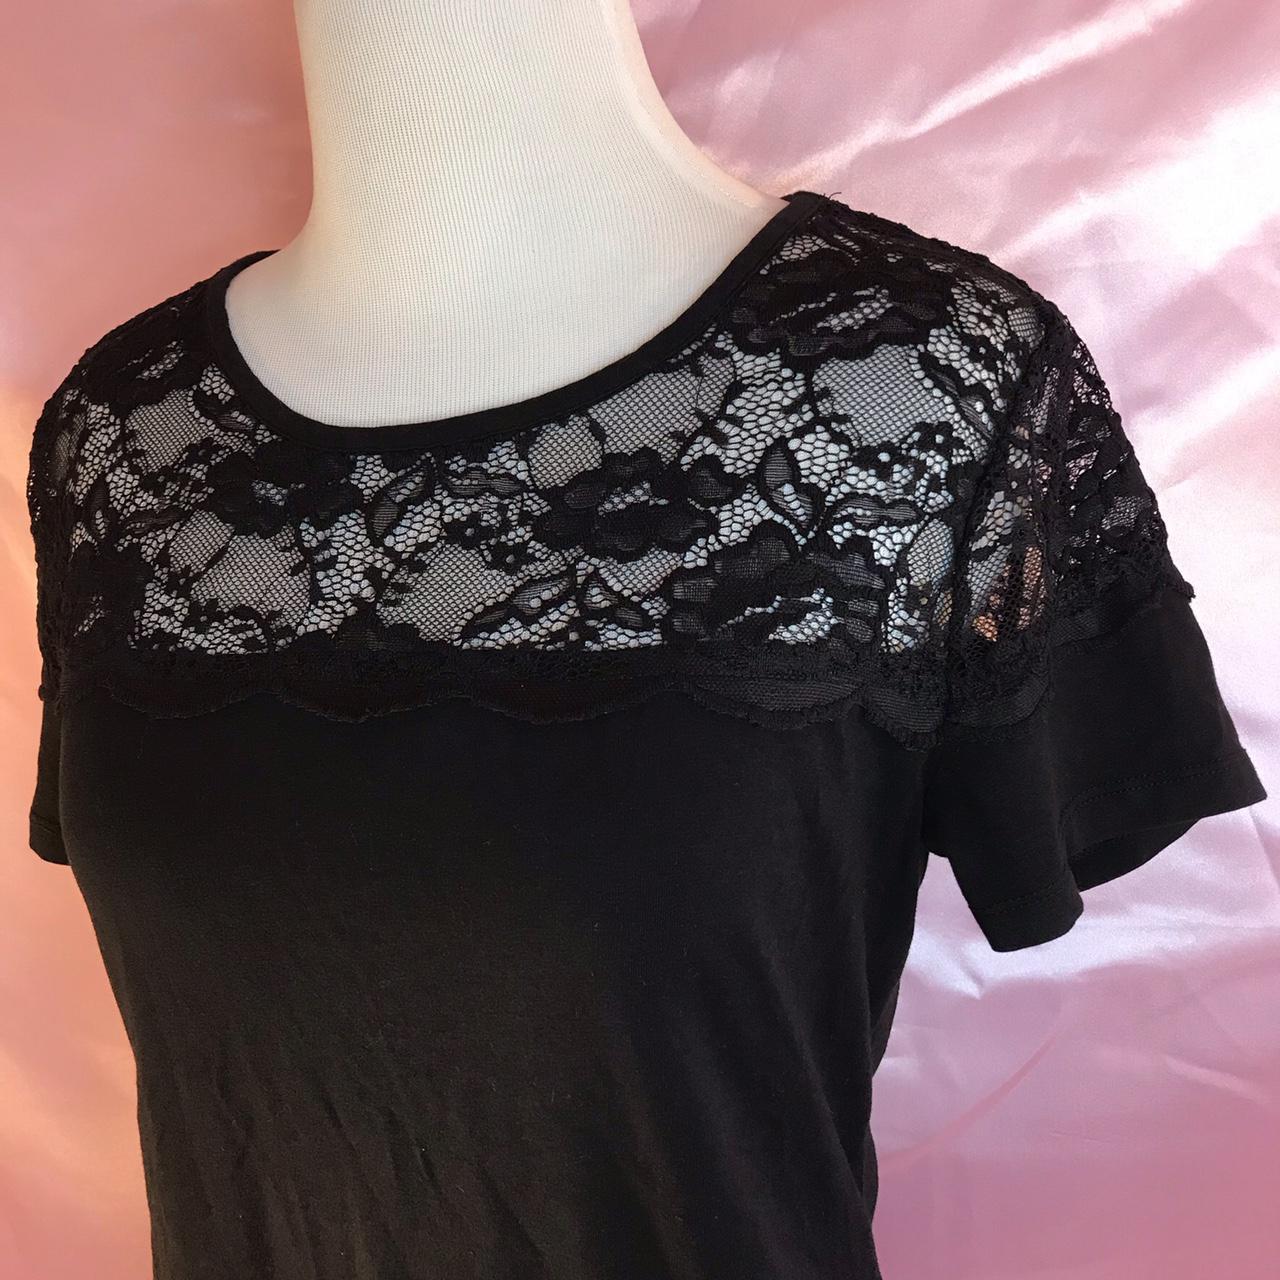 Product Image 2 - H&M black lace panel shirt